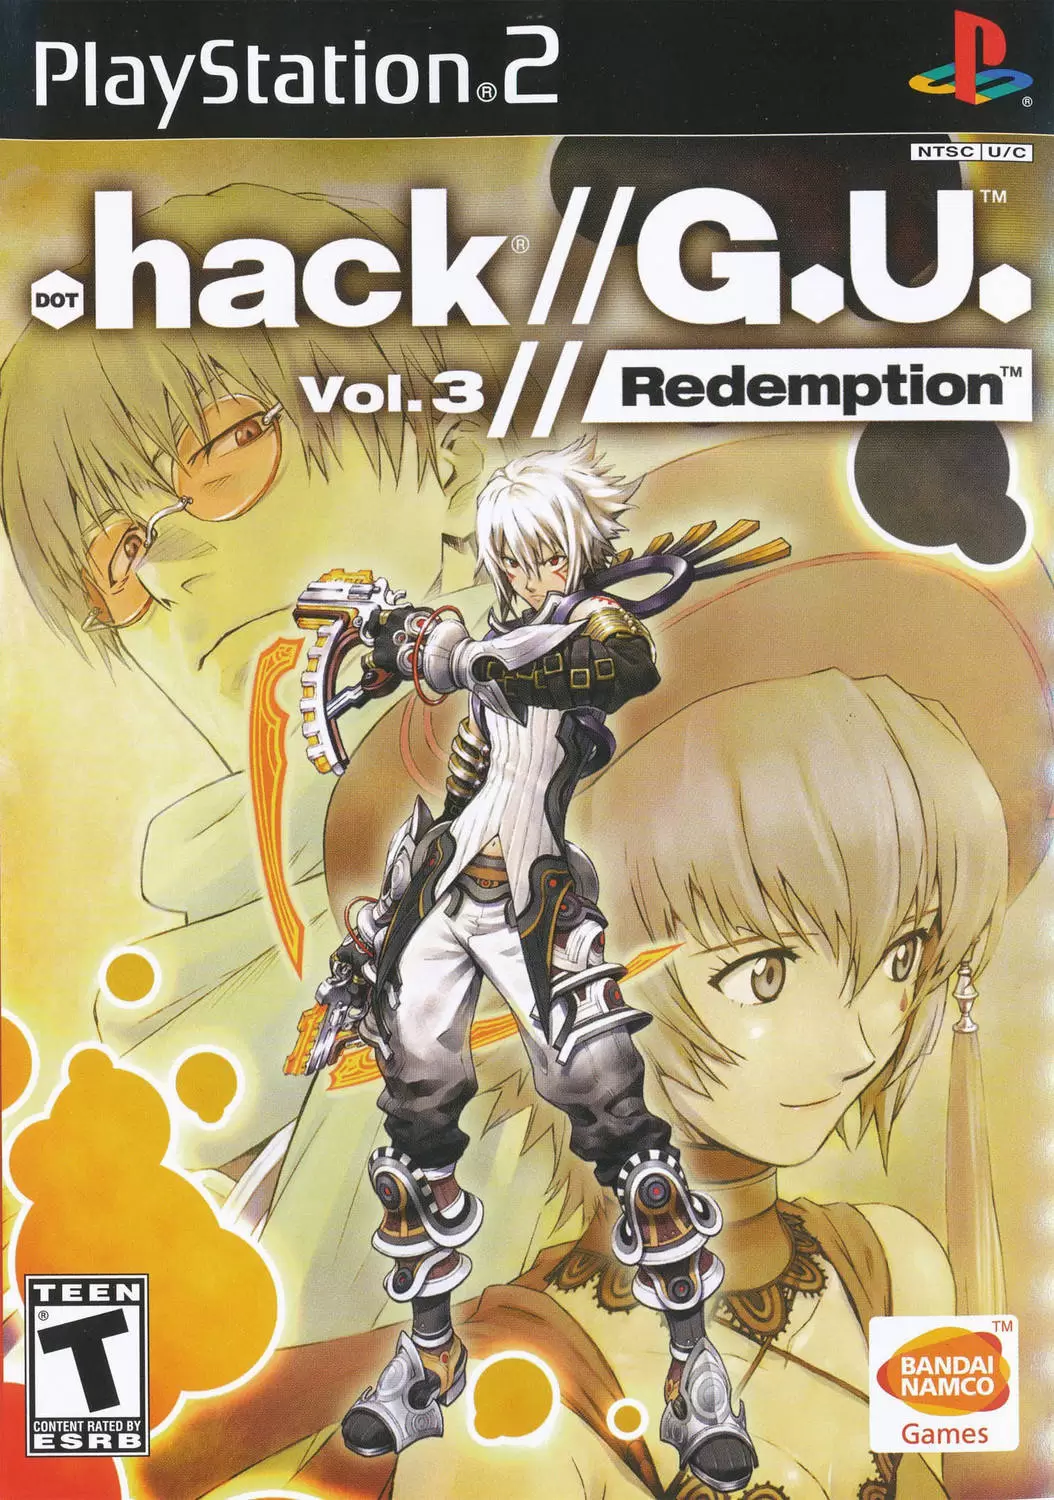 PS2 Games - .hack//G.U. Vol. 3 - Redemption